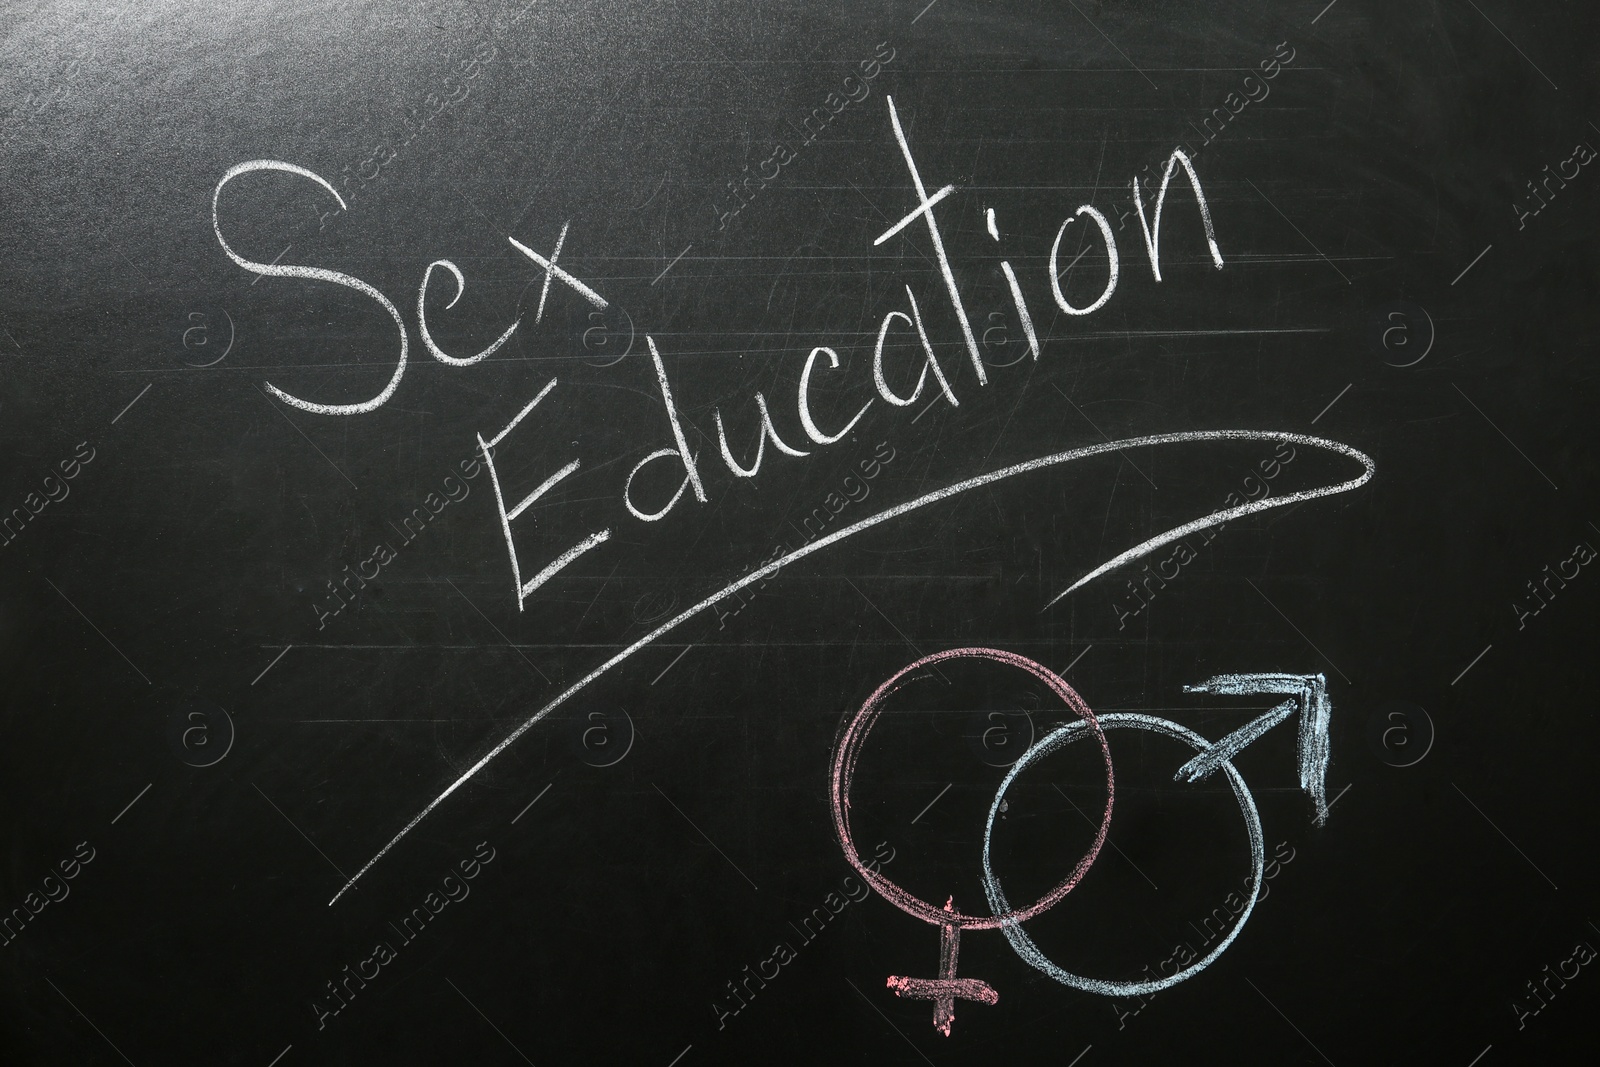 Photo of Gender symbols and phrase "SEX EDUCATION" written on black chalkboard